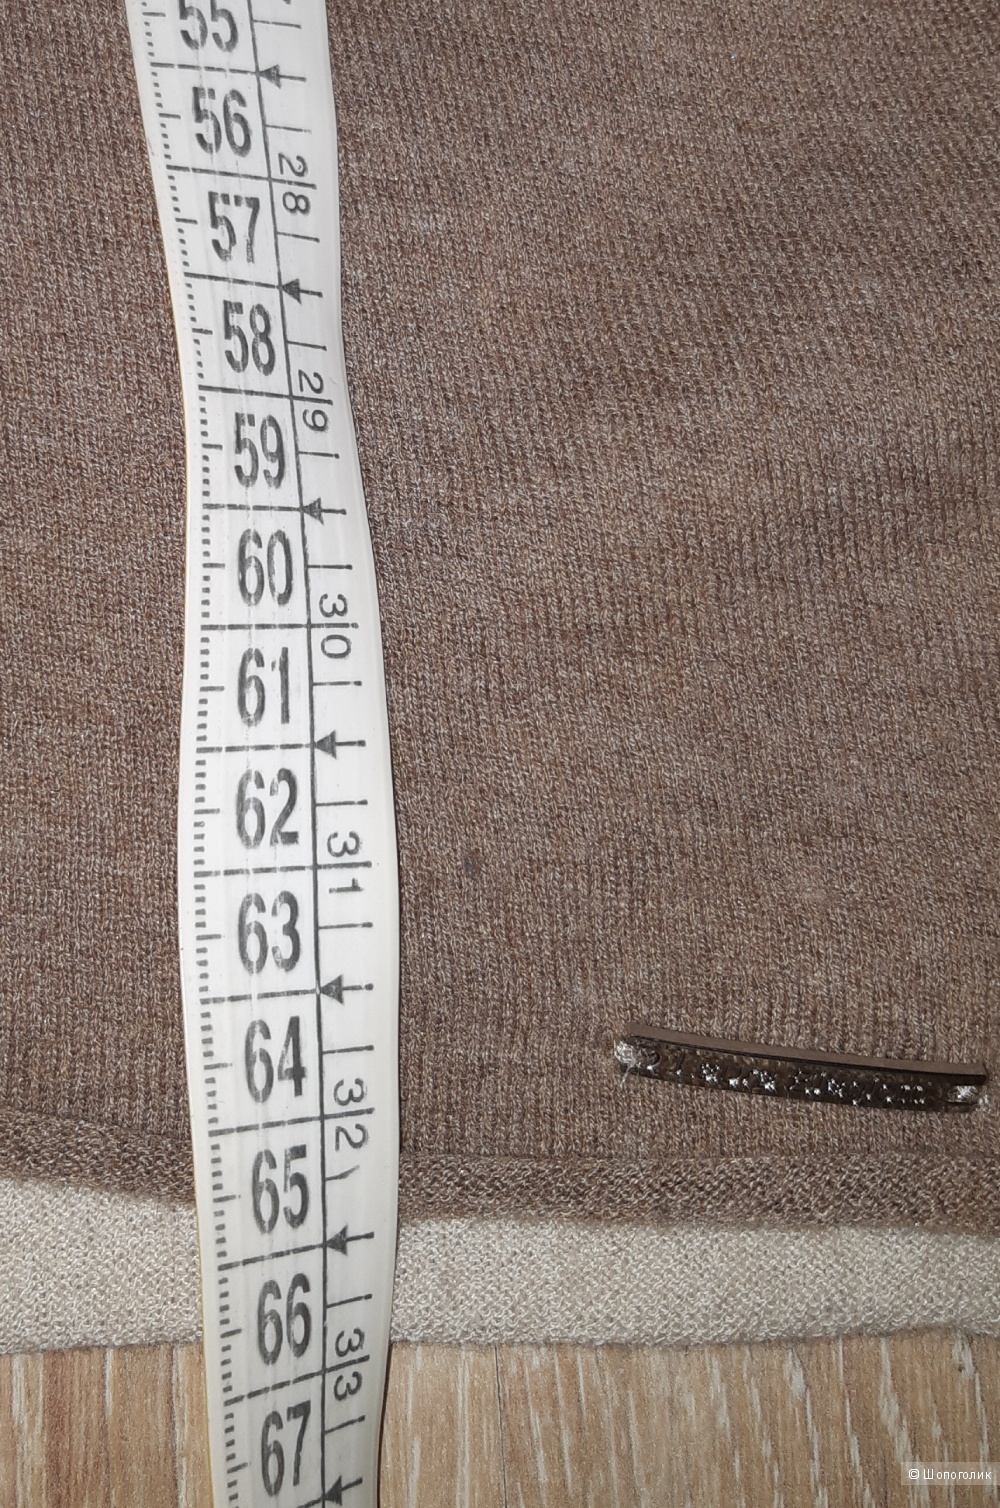 Пуловер laura biagiotti, размер 46/48+-